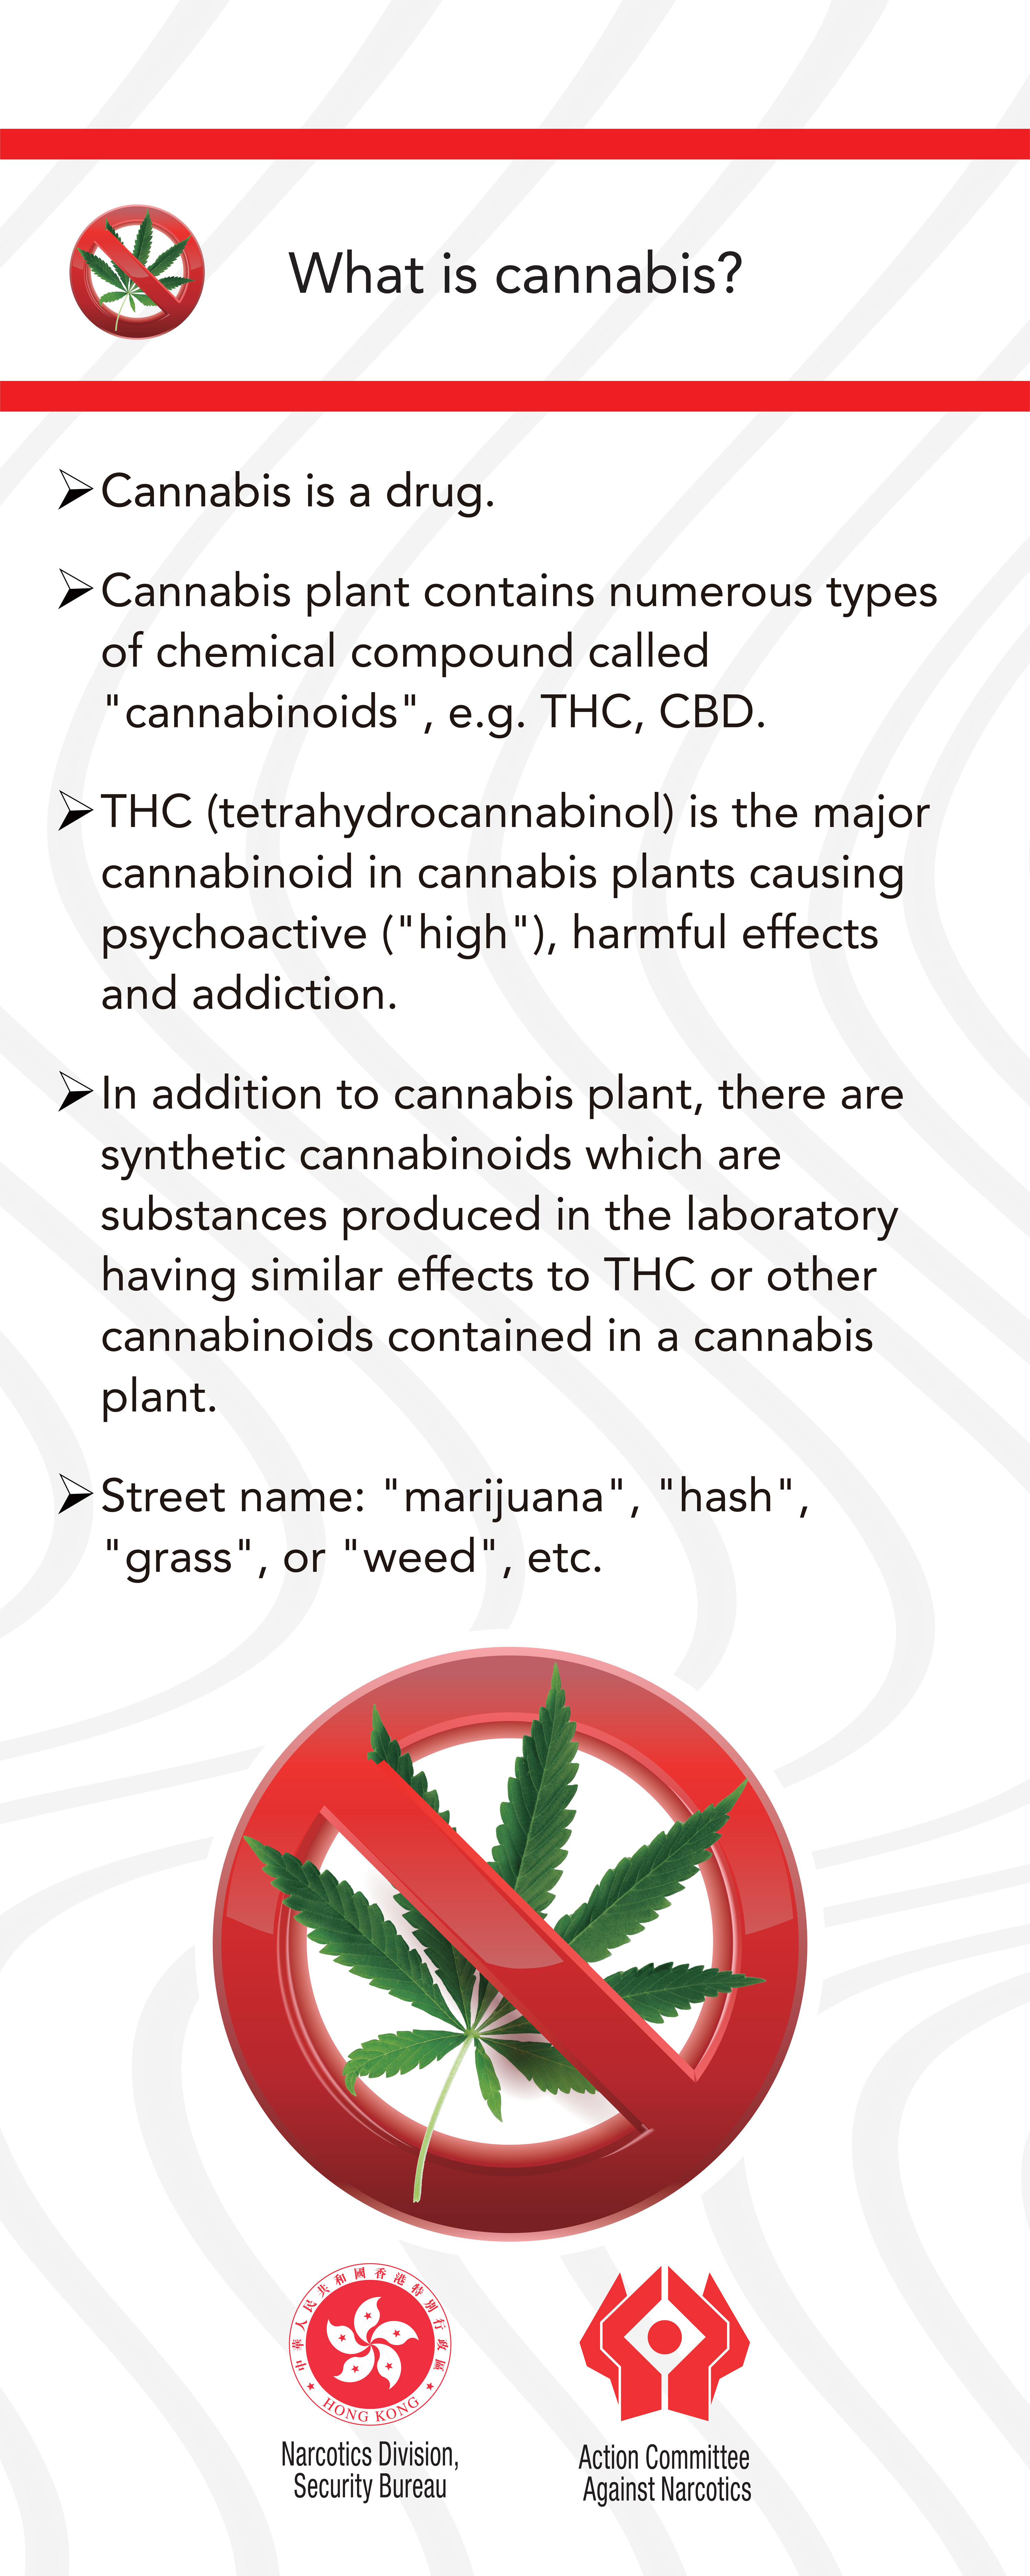 Cannabis is a drug Panel 2